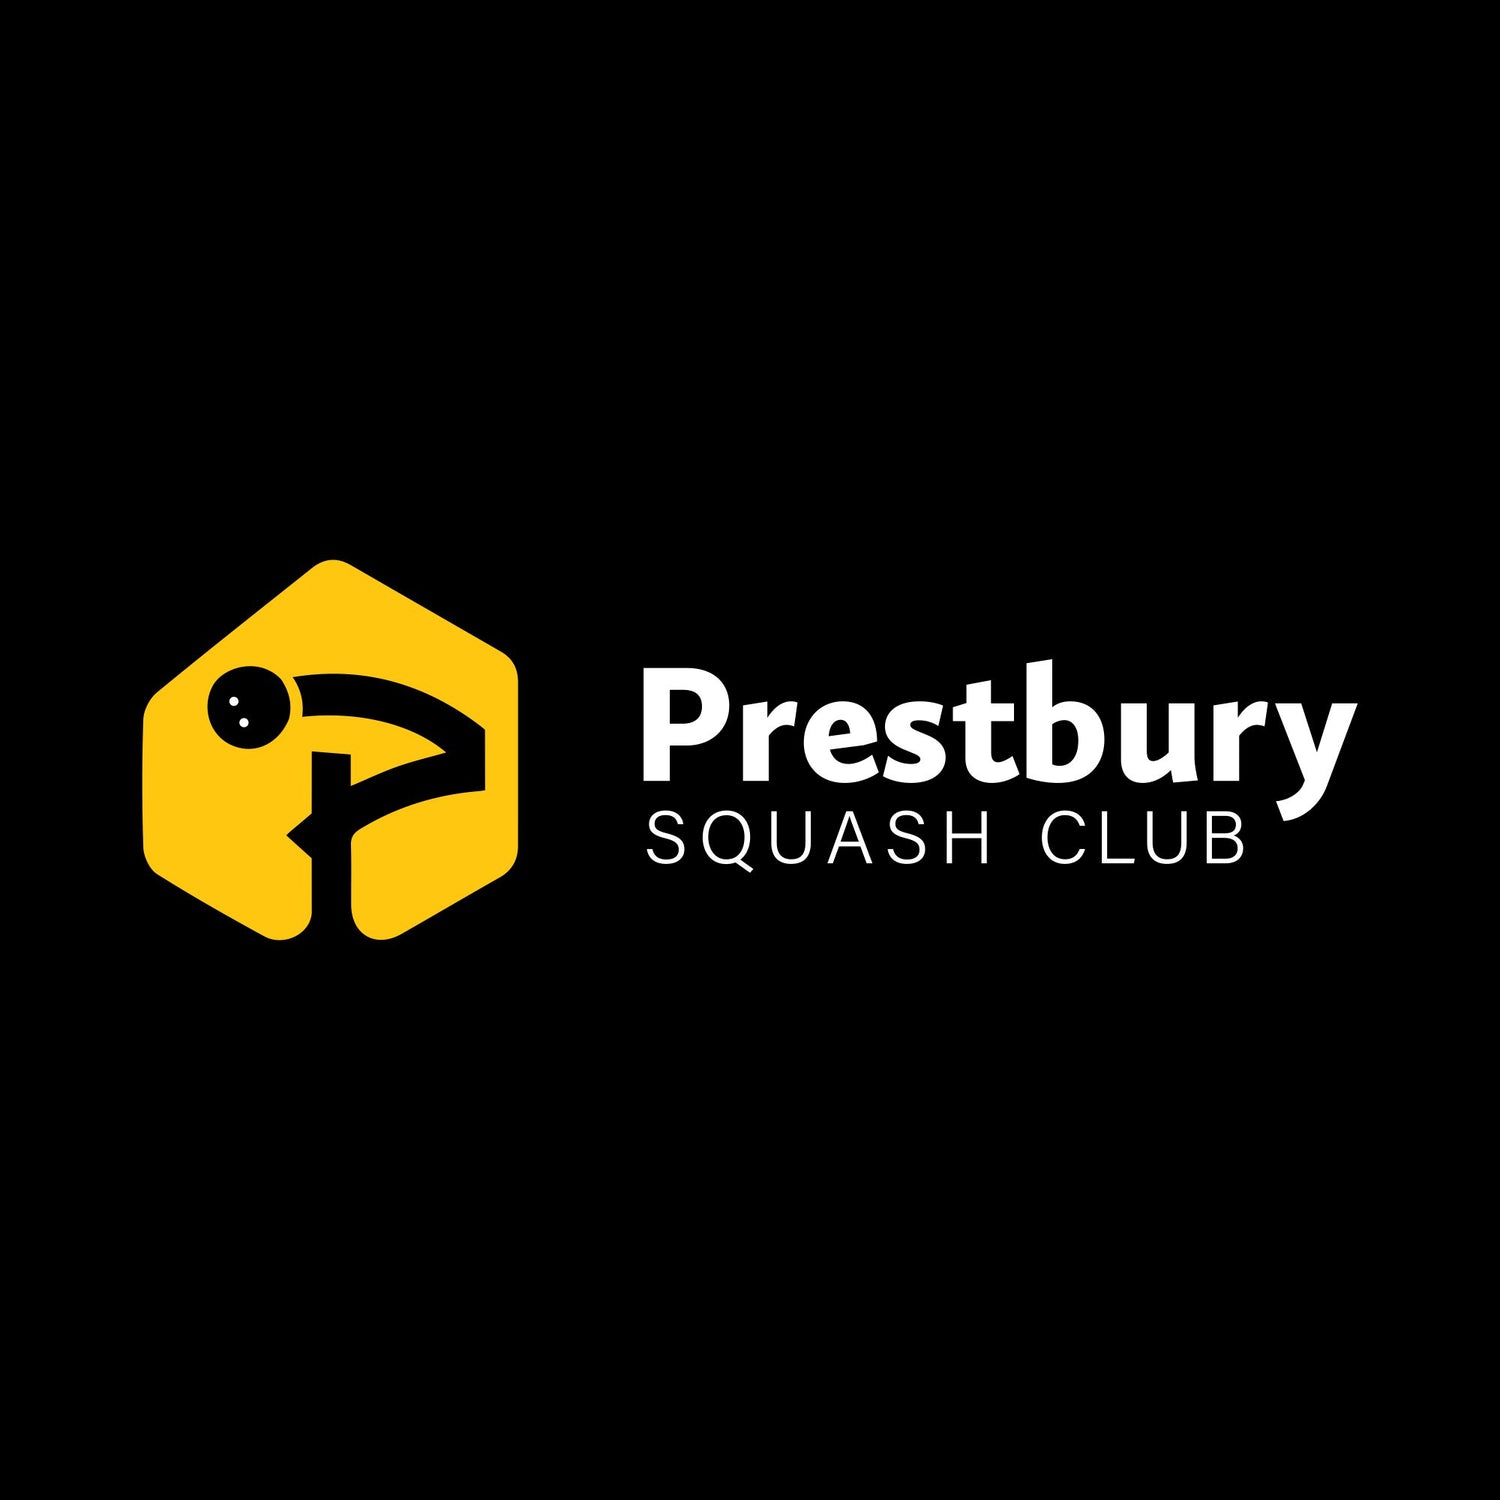 Prestbury Squash Club